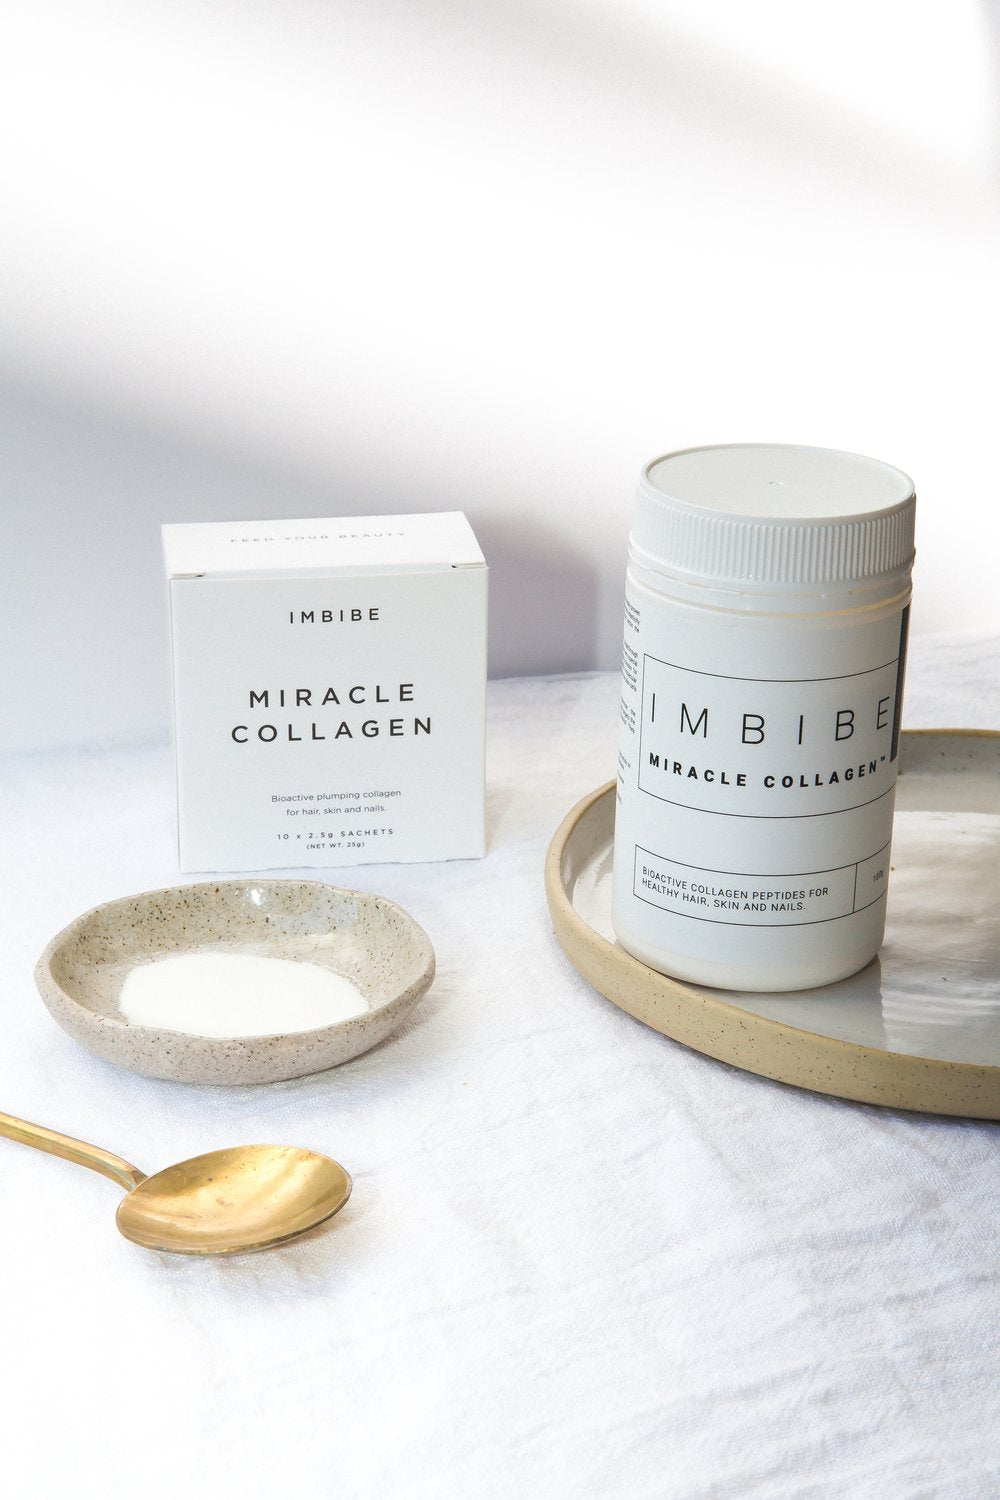 Imbibe Miracle Collagen